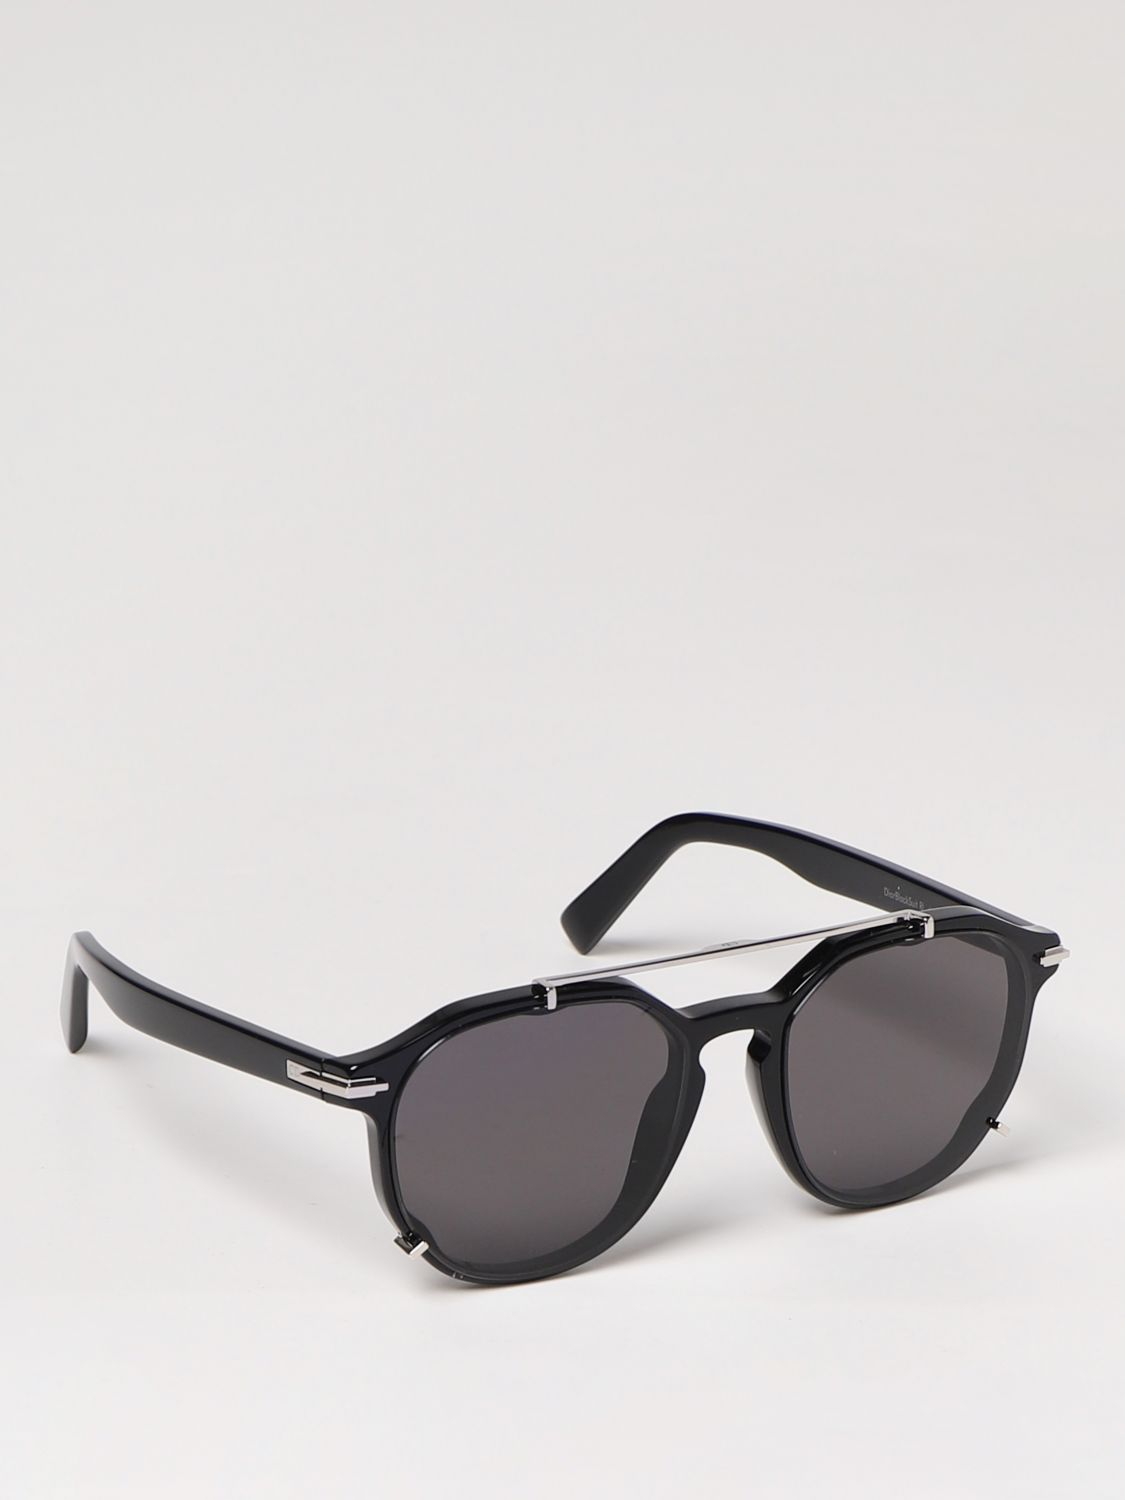 we ғoυnd love itsmypics  Dior sunglasses Christian dior  sunglasses Ray bans